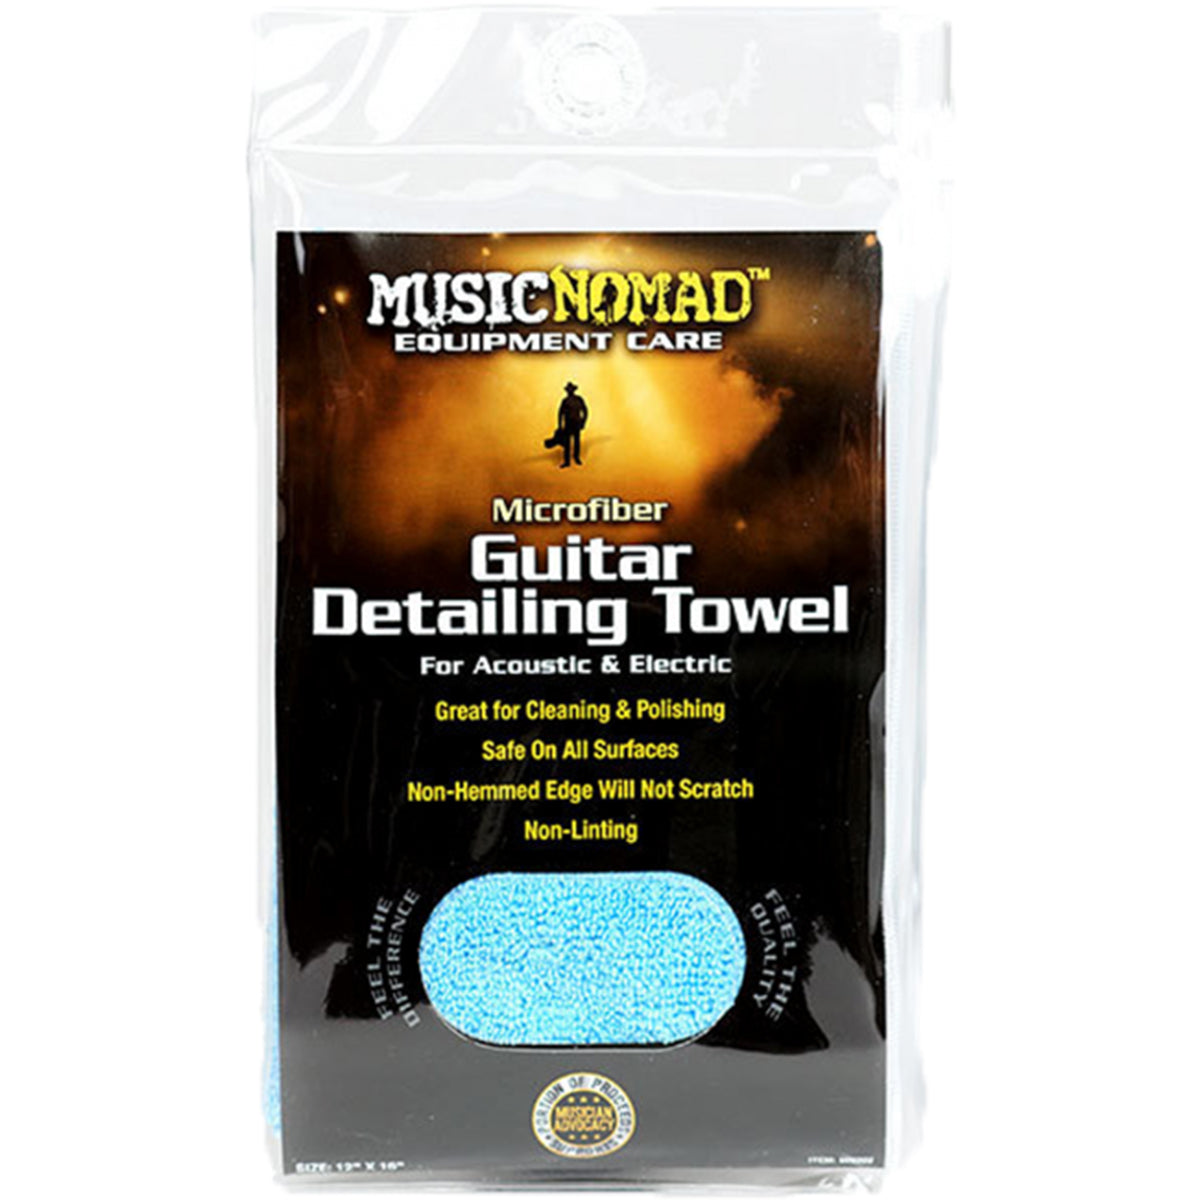 Music Nomad MN202 Microfiber Guitar Detailing Towel 12x16inch